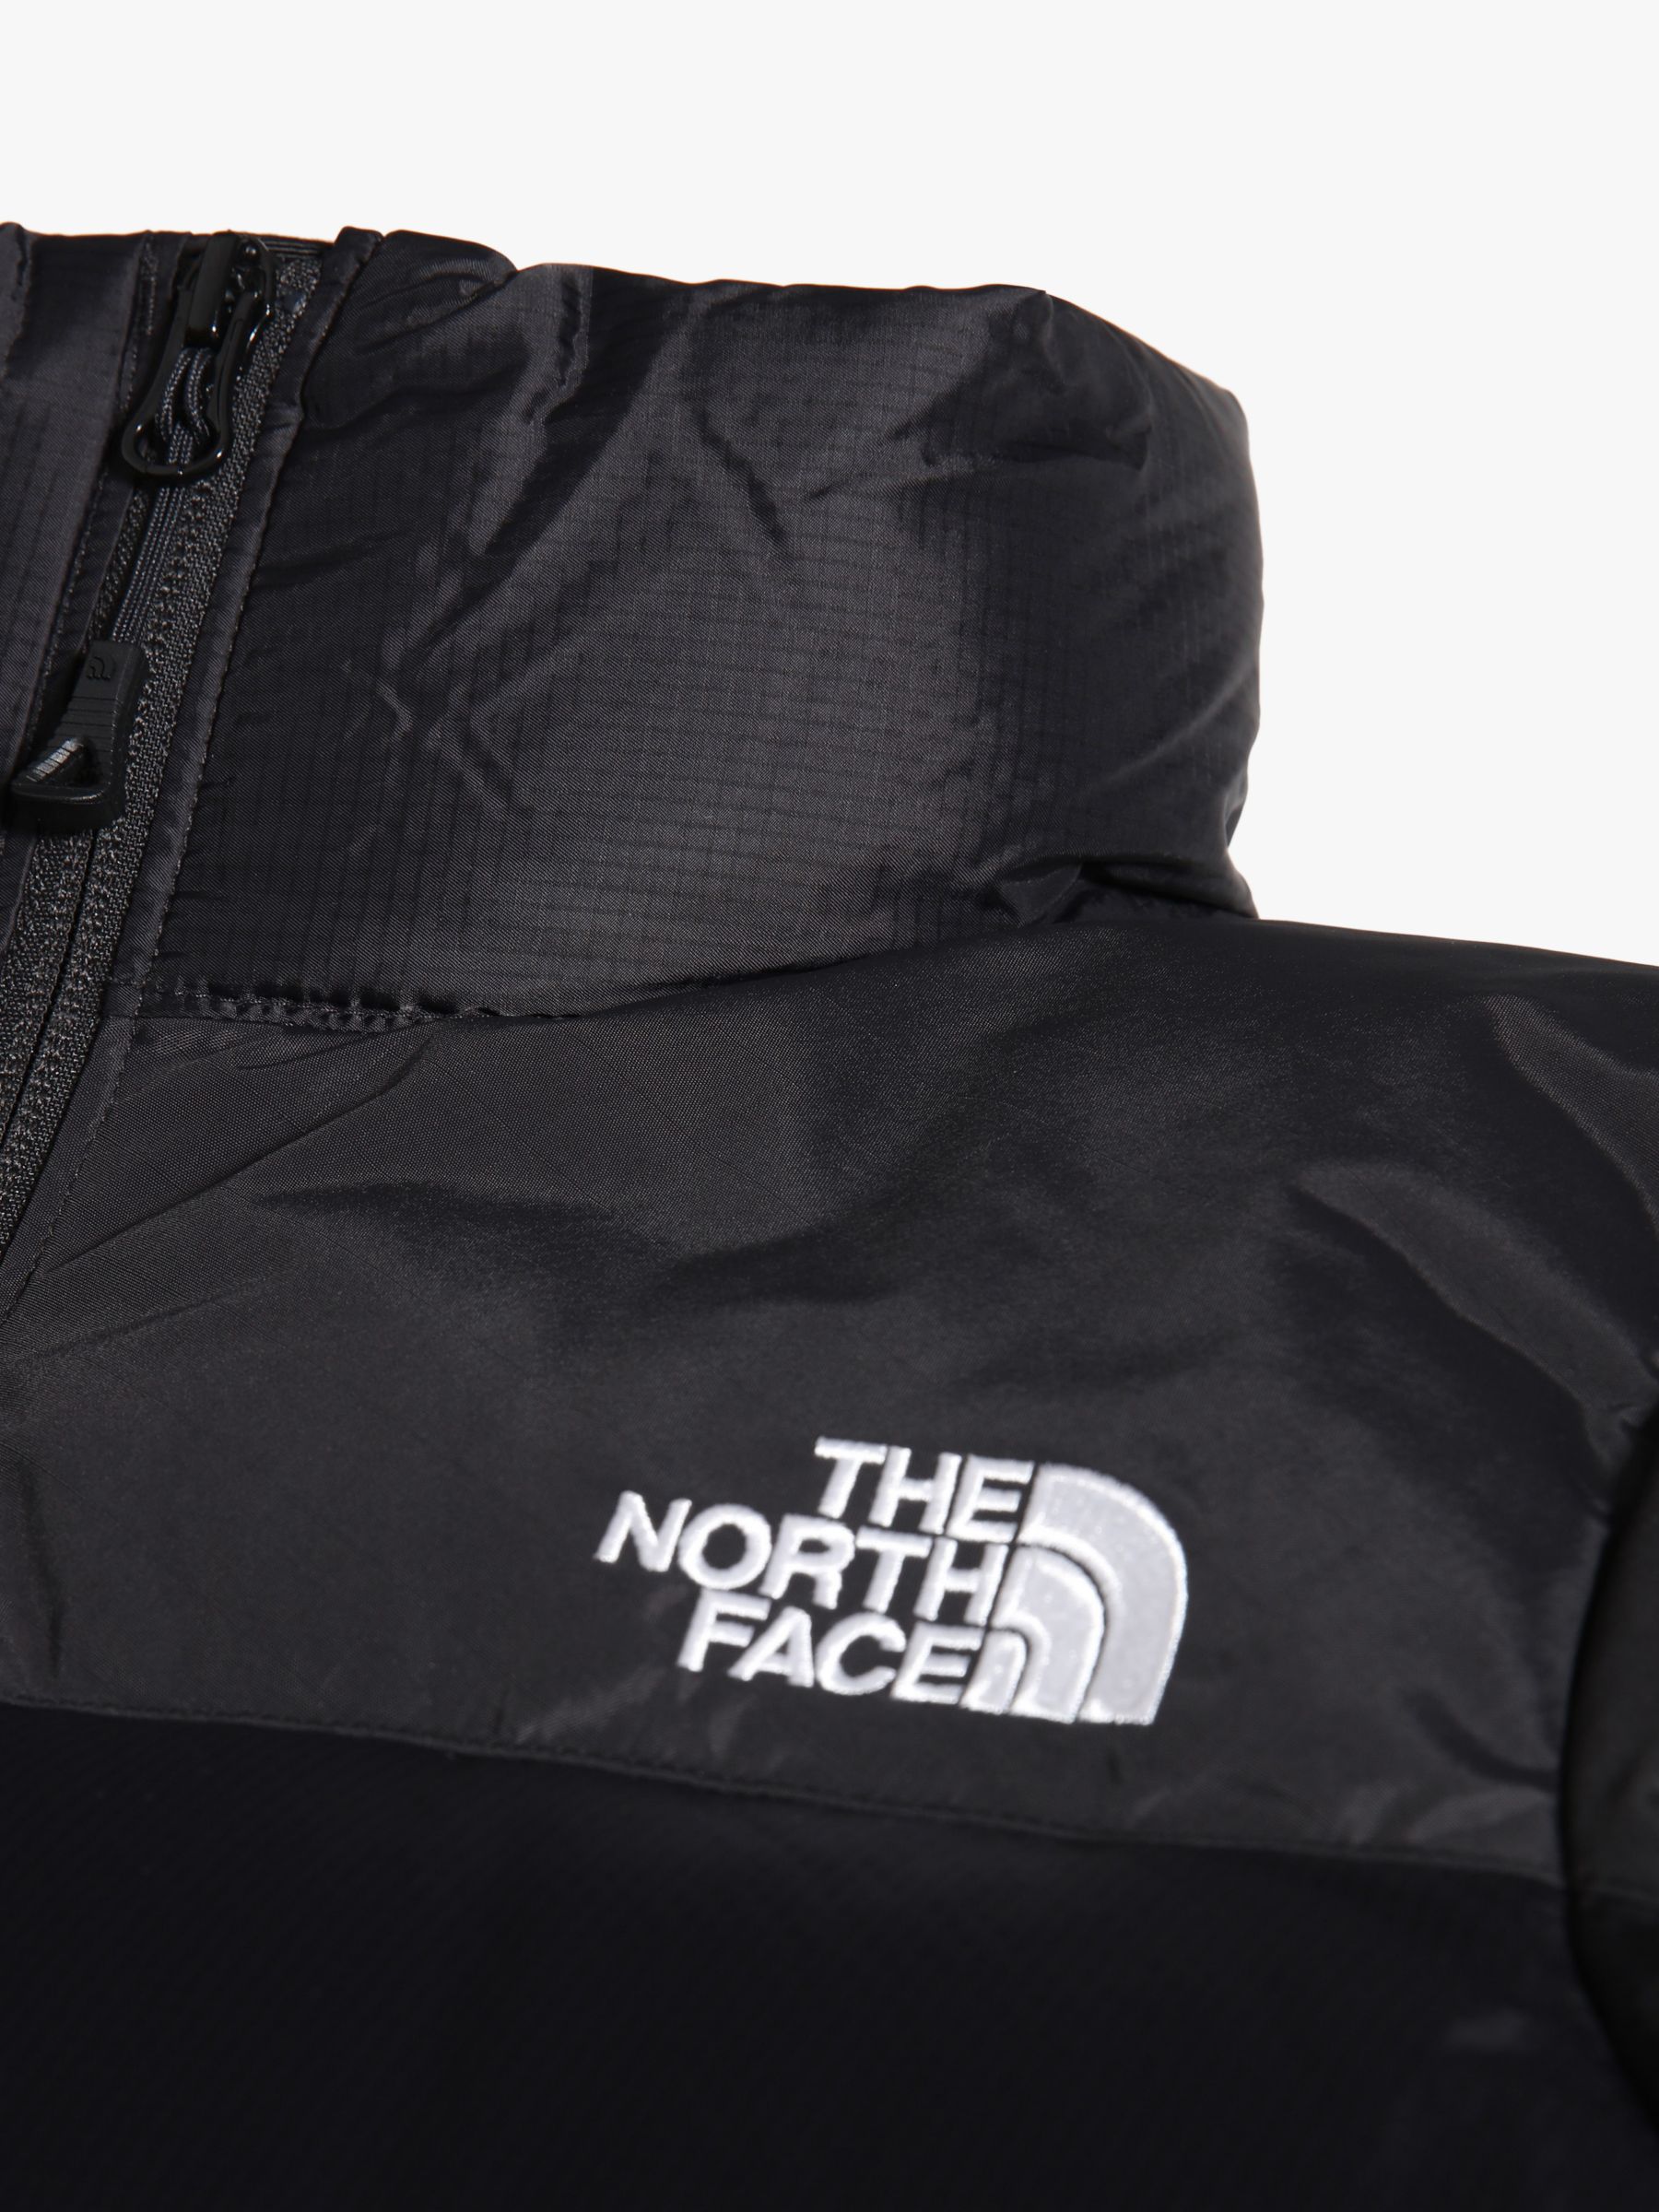 Buy The North Face Diablo Down Women's Water Repellent Jacket Online at johnlewis.com